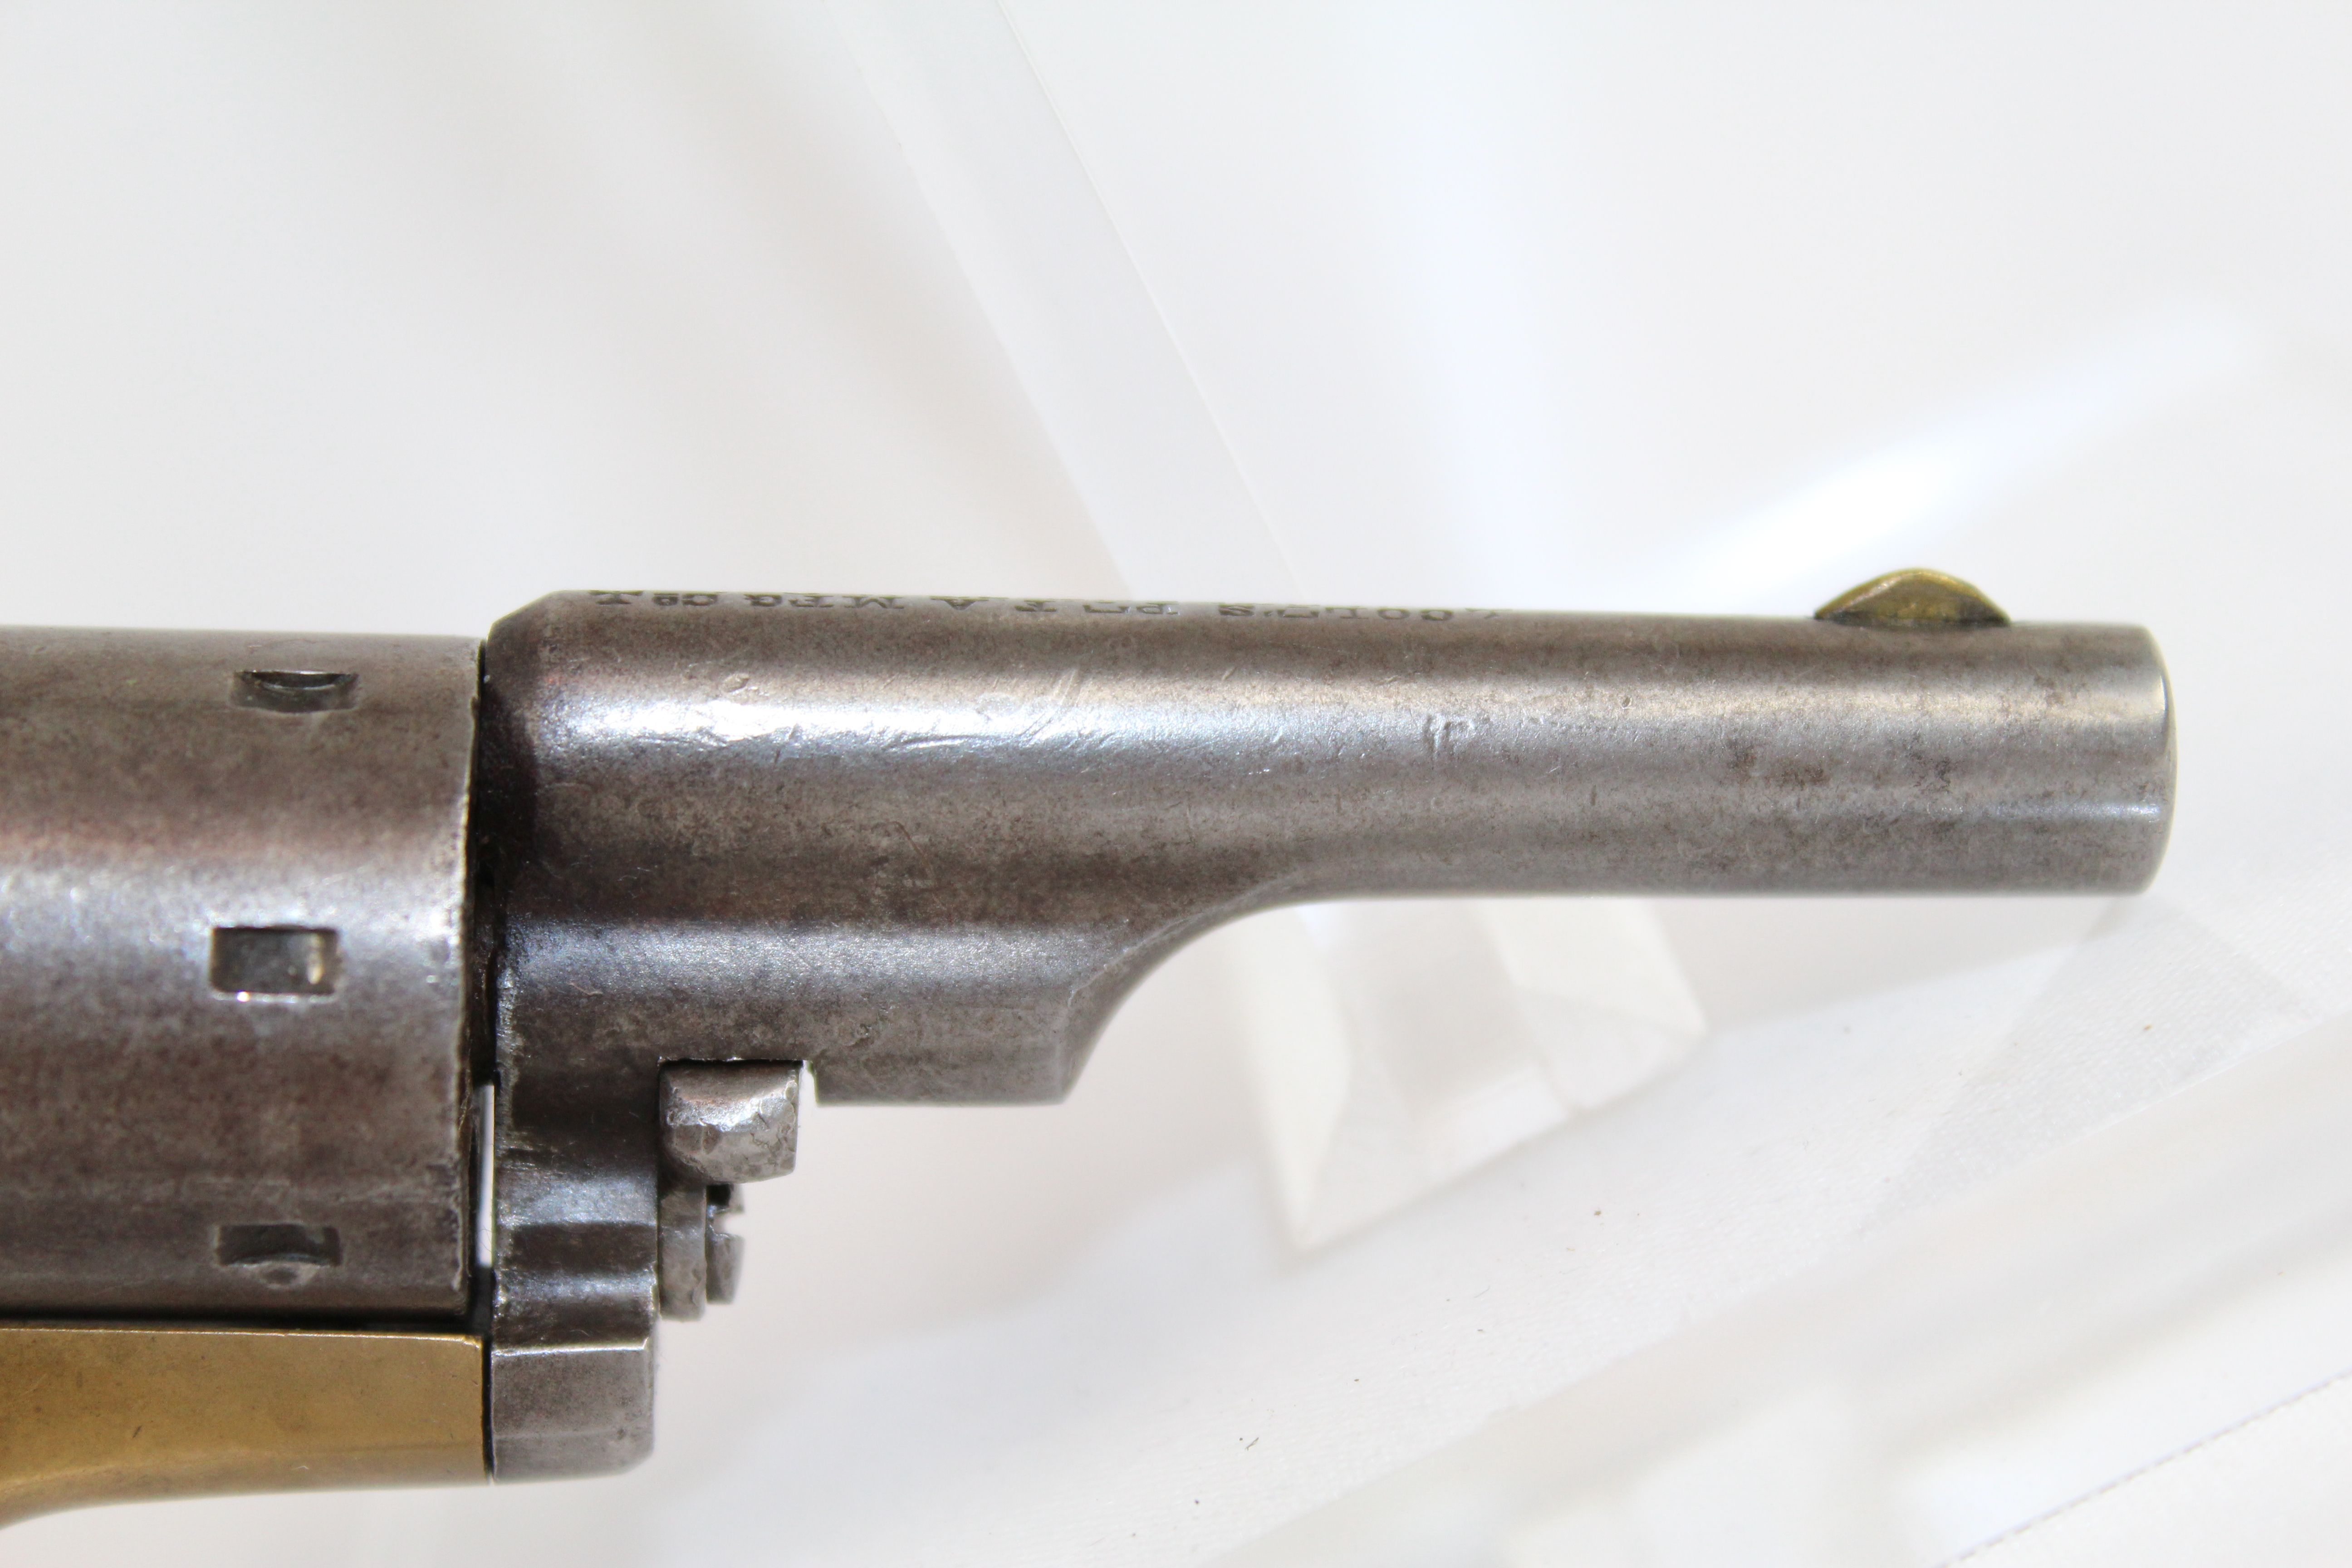 Colt Open Top Revolver Antique Firearms Ancestry Guns